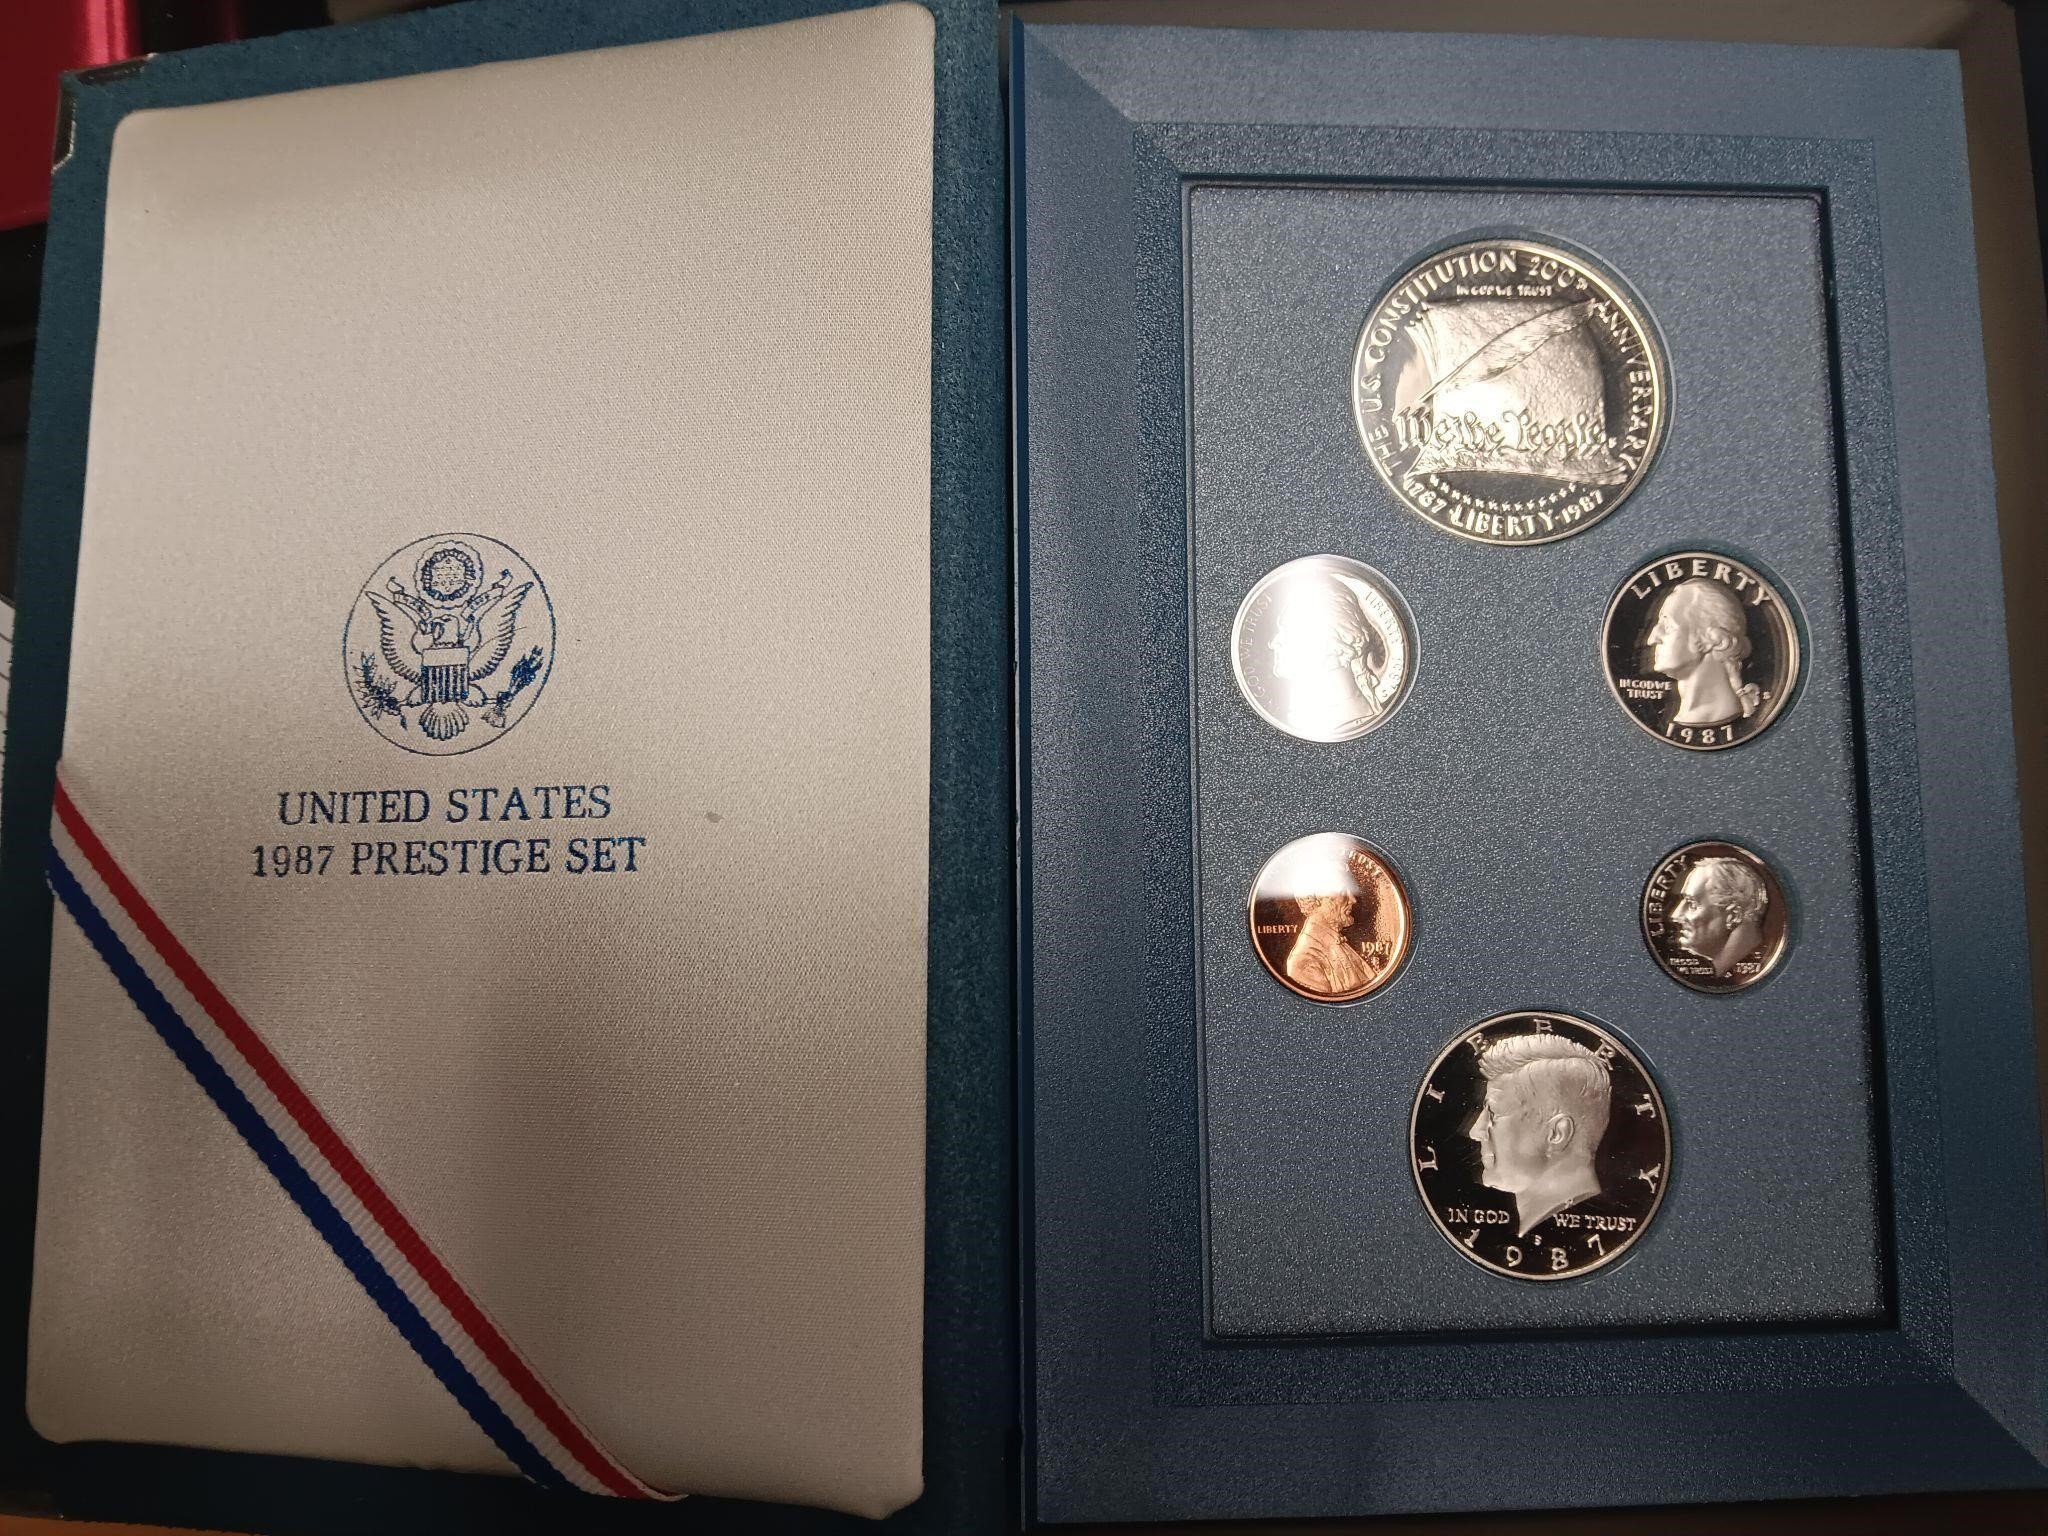 1987 Prestige Set from the US Mint